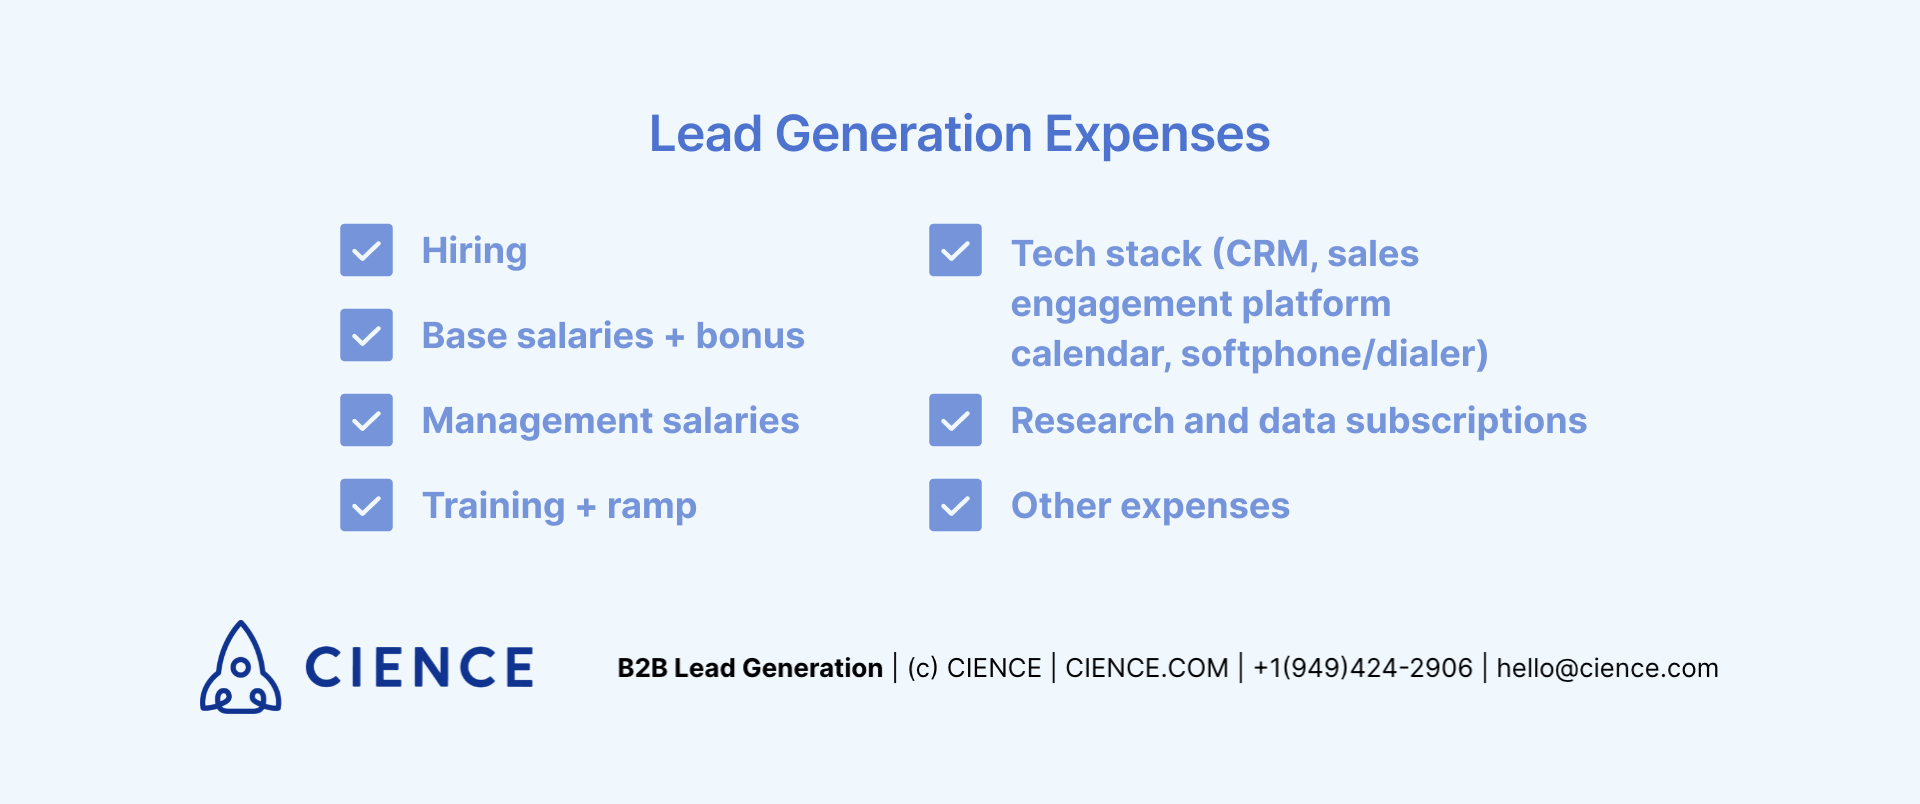 Lead Generation Expenses